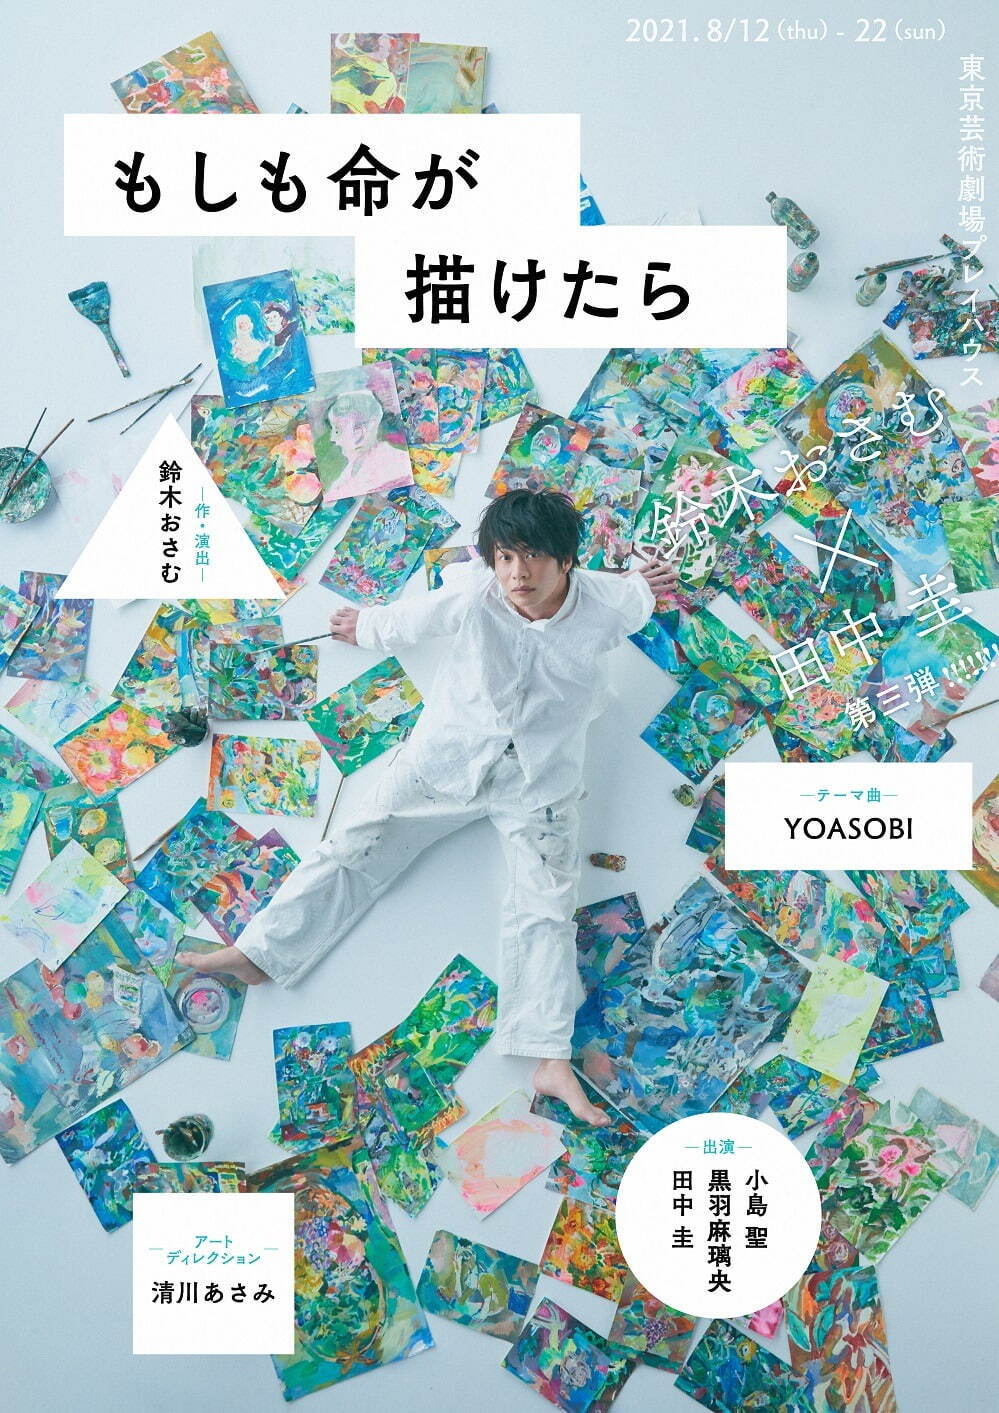 YOASOBIの新曲、田中圭主演の舞台「もしも命が描けたら」テーマ曲に